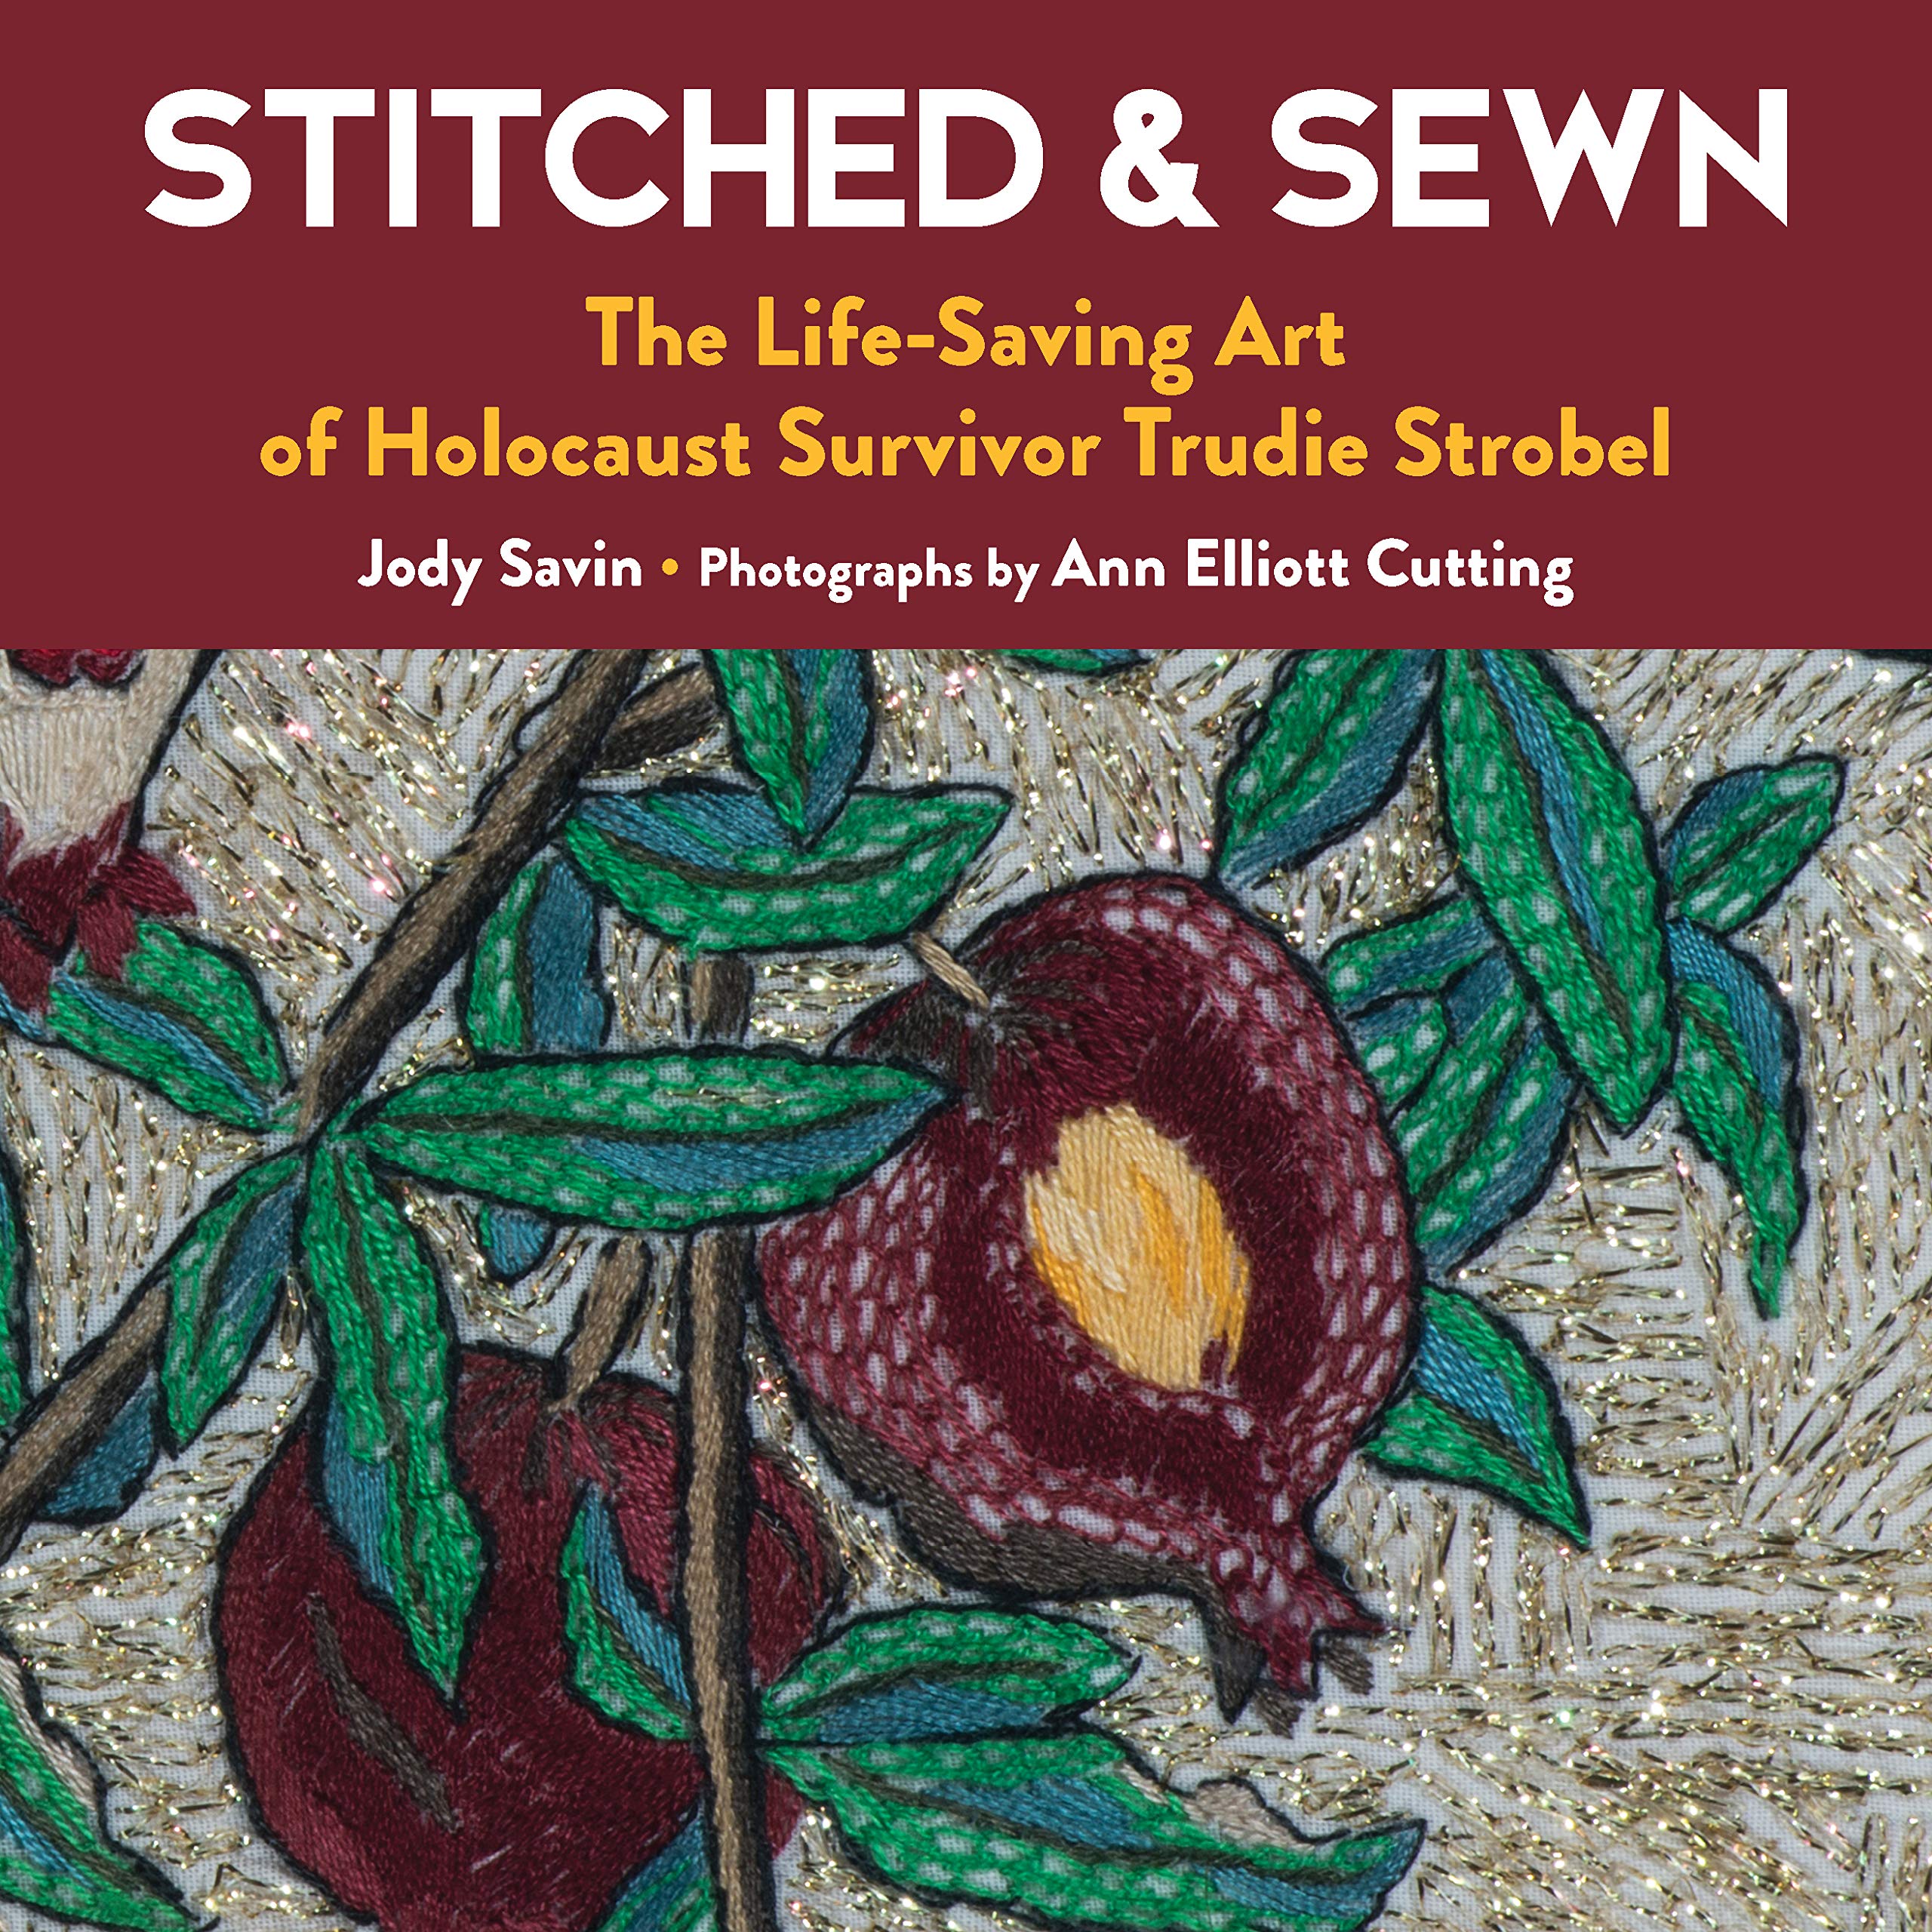 Stitched & Sewn: The Life-Saving Art of Holocaust Survivor Trudie Strobel by Savin, Jody